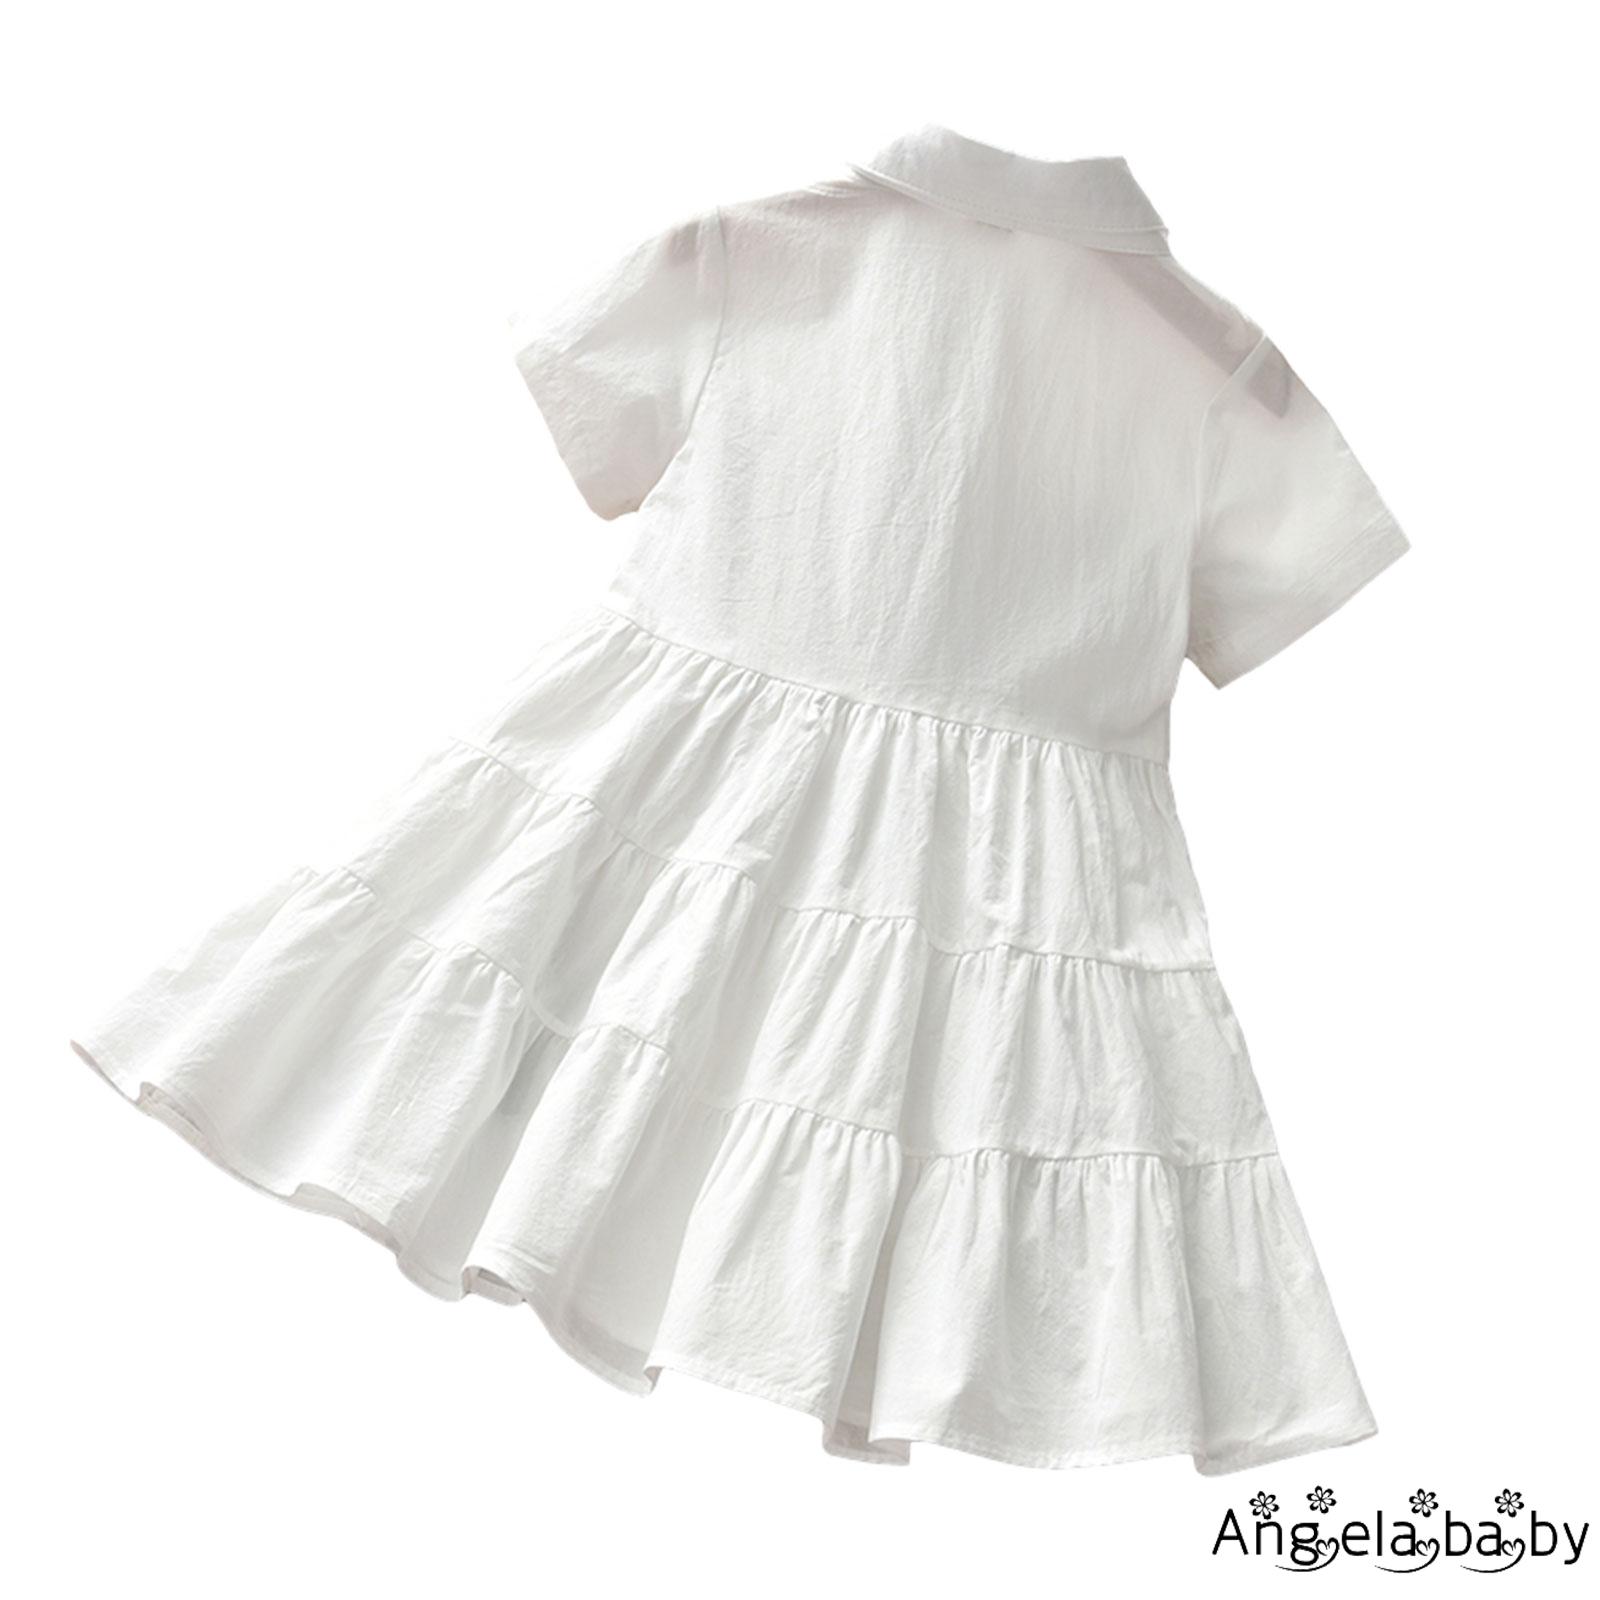 HIAN-Little Girls Summer Lapel Dress, Short Sleeve Solid Color Button Front Loose Fit Dress